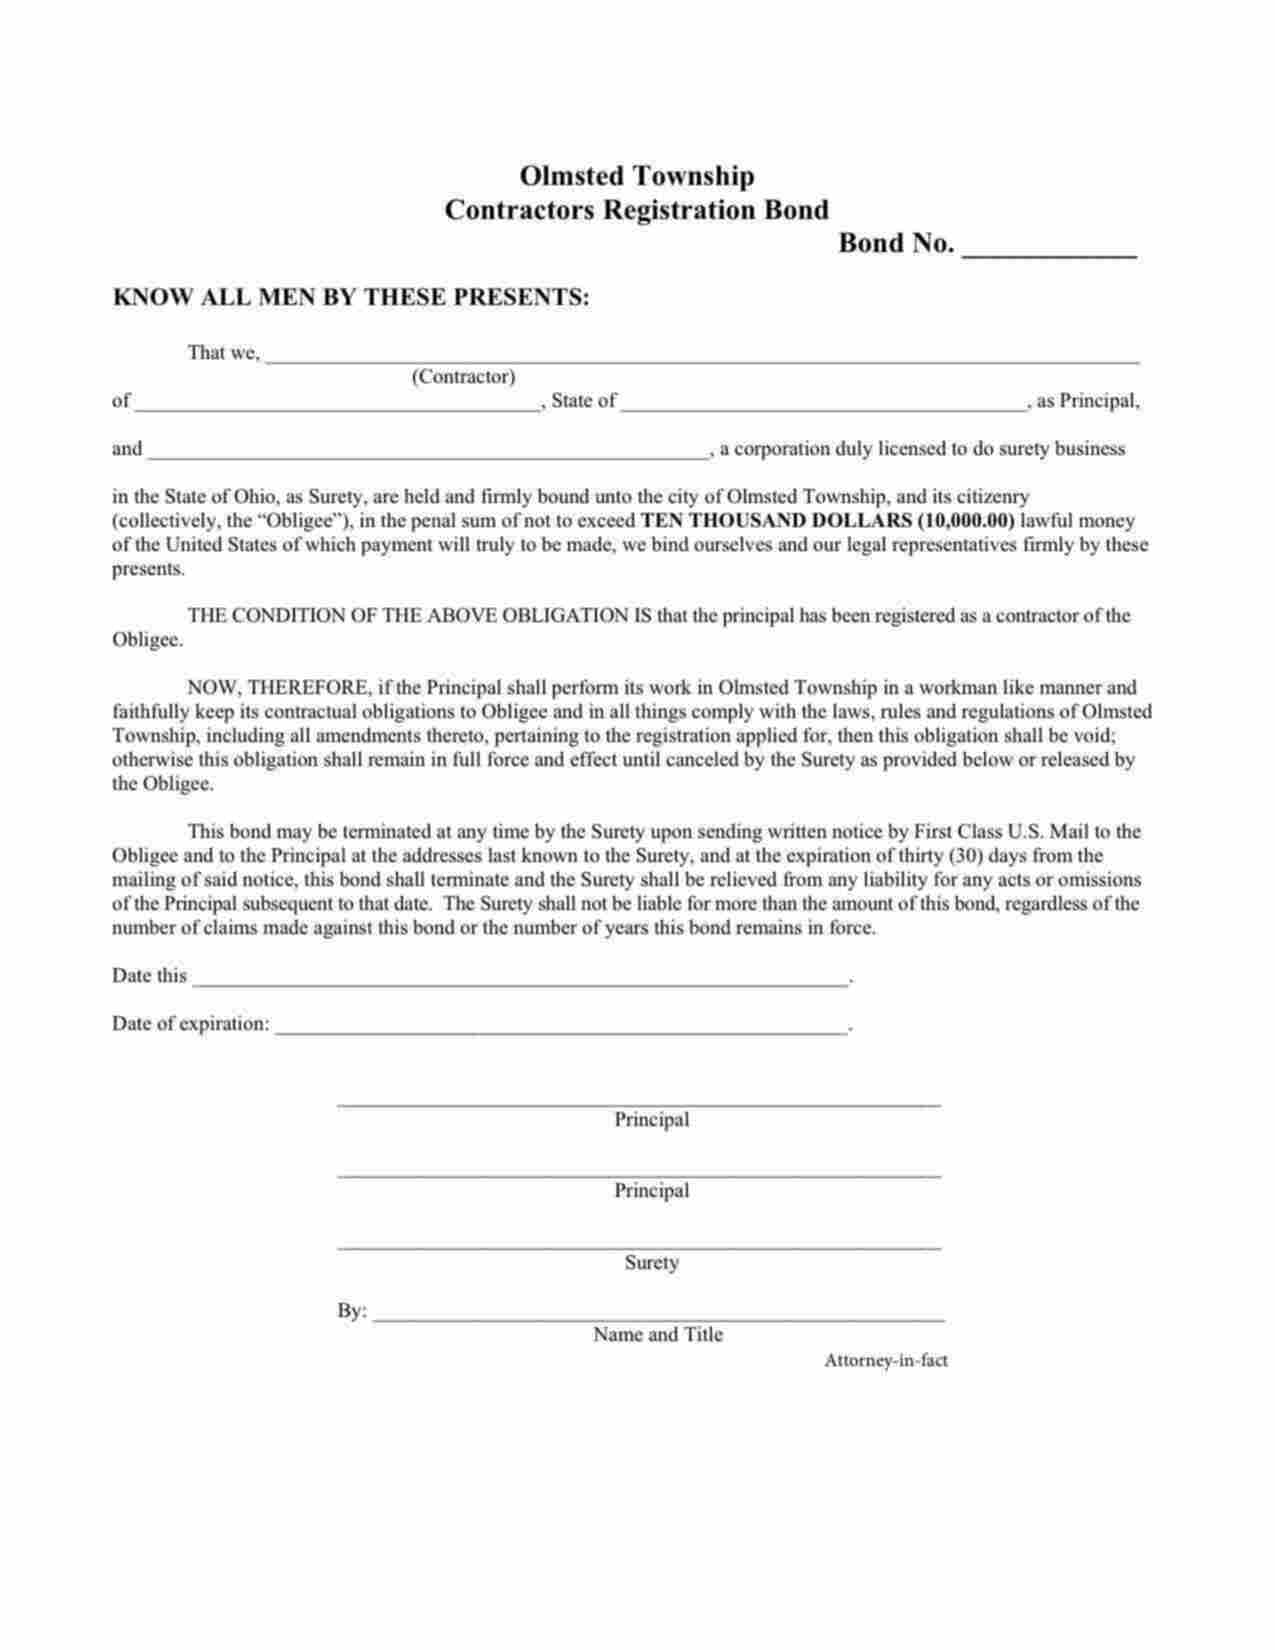 Ohio Contractors Registration Bond Form